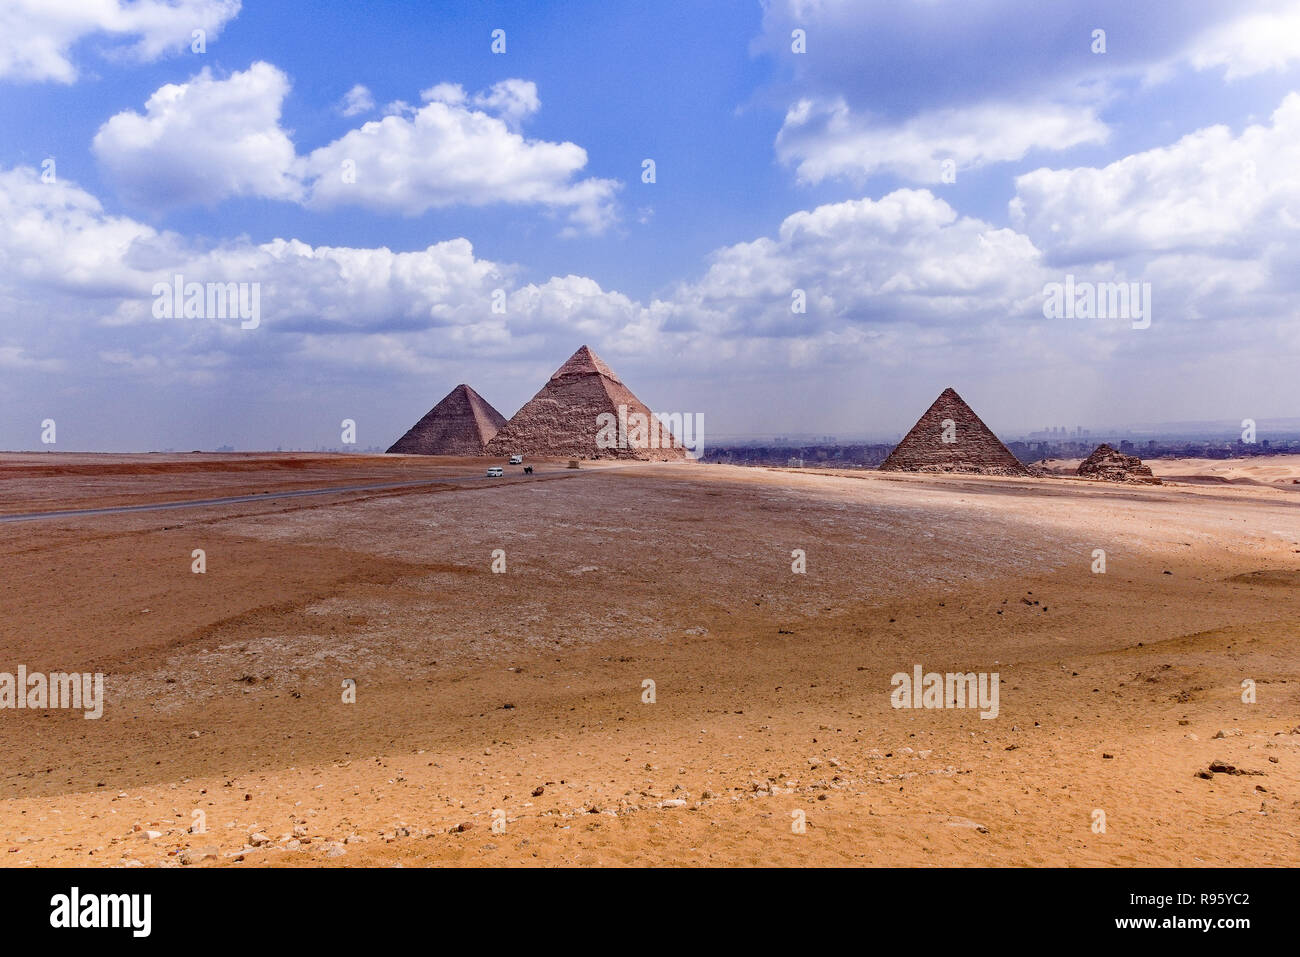 Pyramids on the Giza Plateau, Cairo, Egypt. Stock Photo